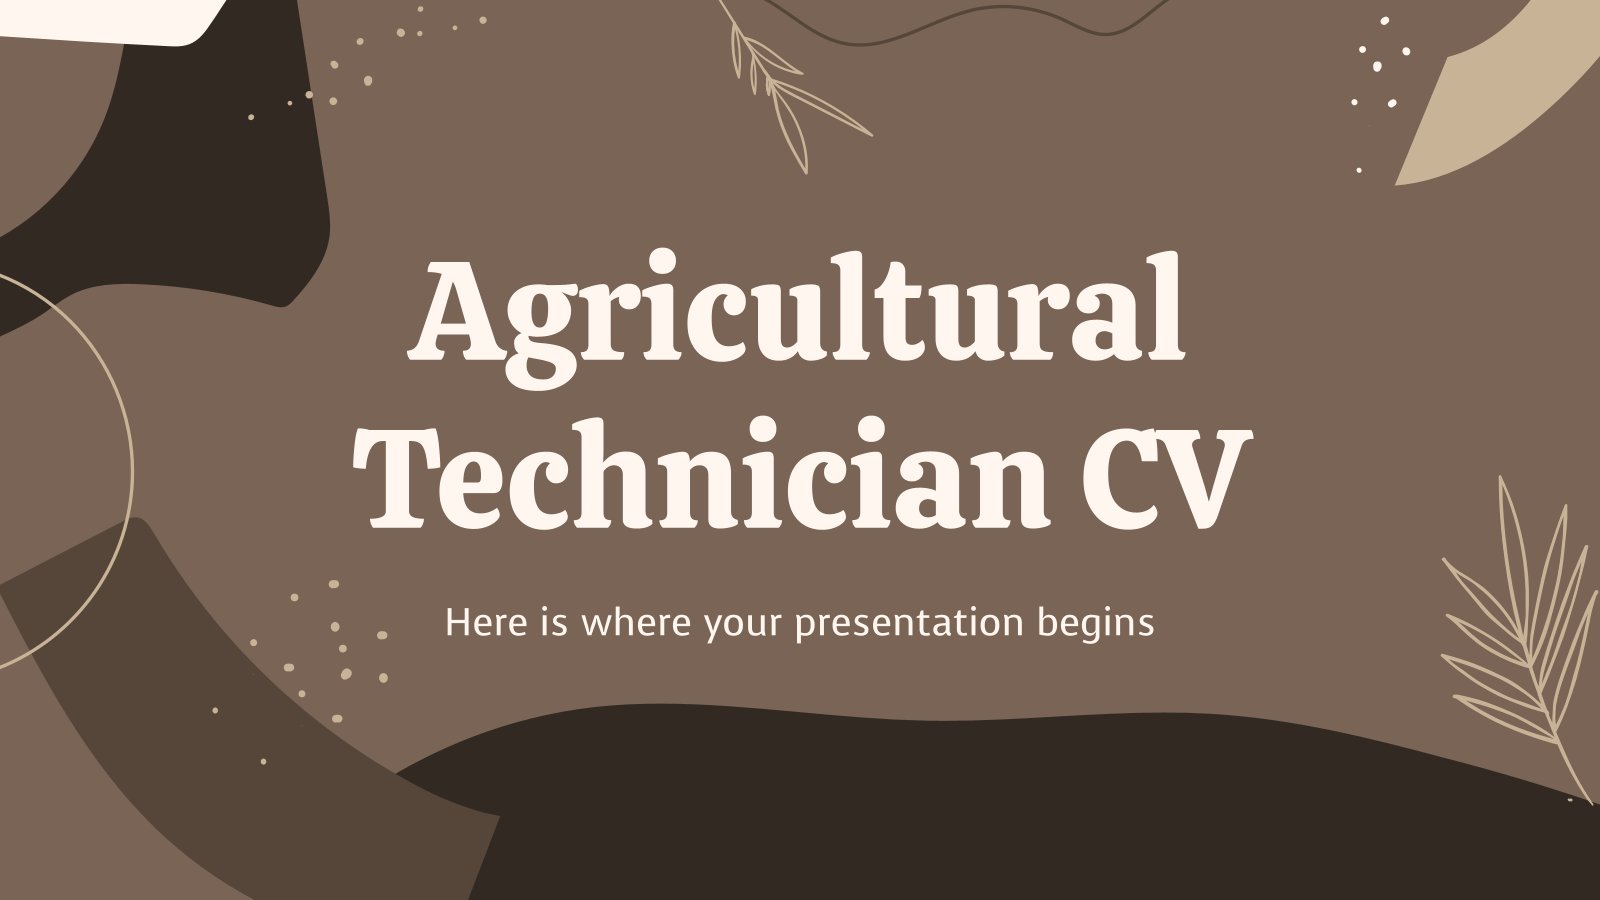 Agricultural Technician CV presentation template 